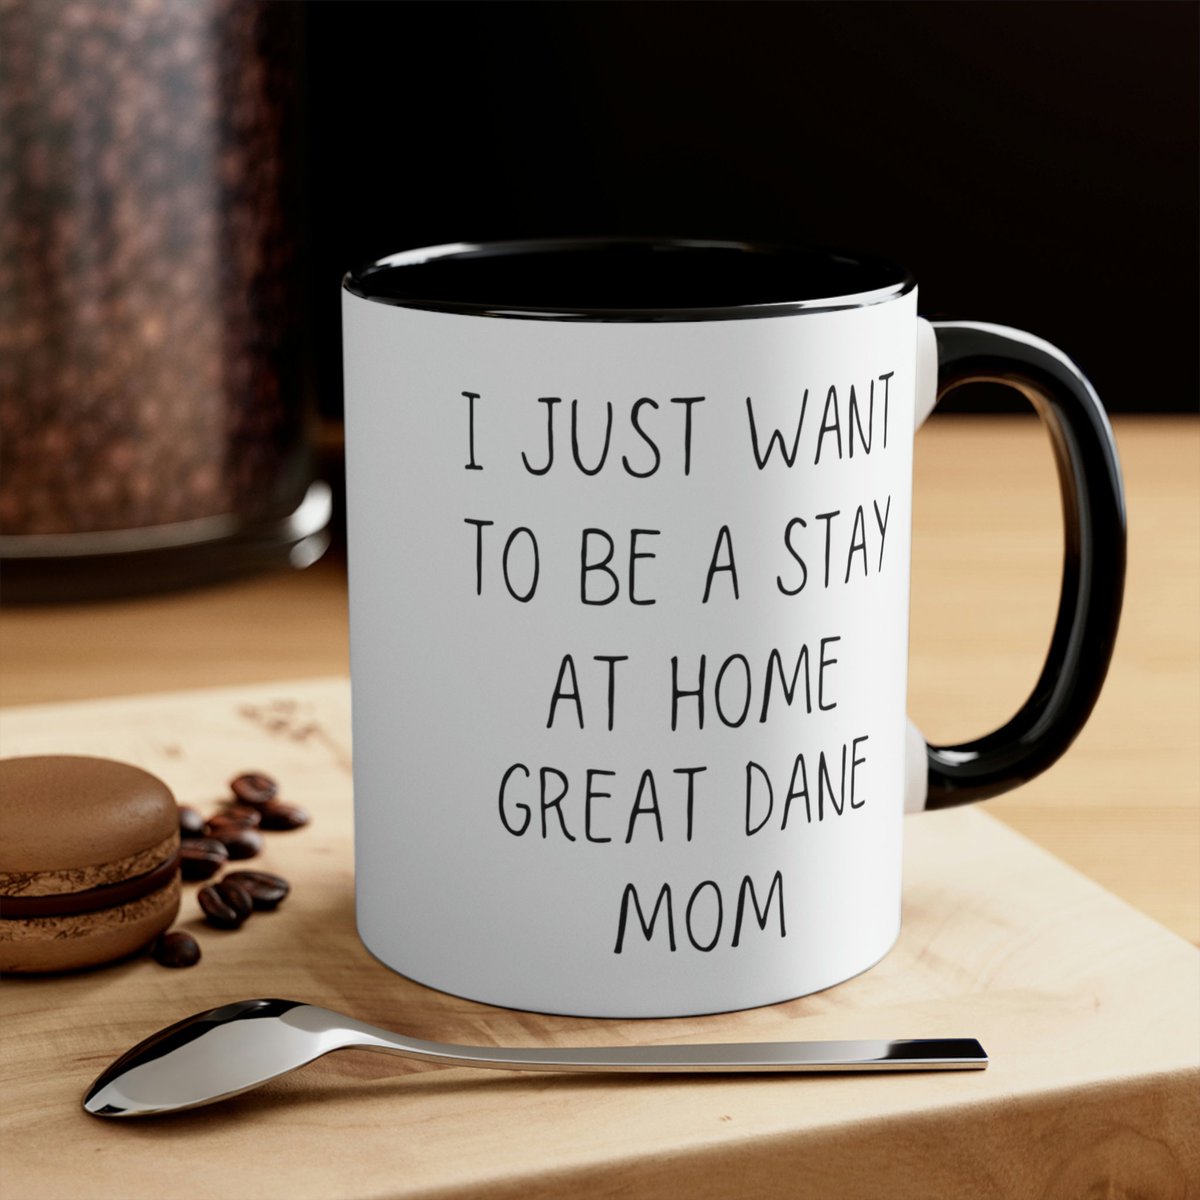 Funny Great Dane Mom Gift Mug #greatdane #greatdanedog #greatdanegift #danemothersday #greatdanemom #greatdanemug #greatdanemombirthday CLICK HERE TO BUY NOW: etsy.me/3KSHLZR